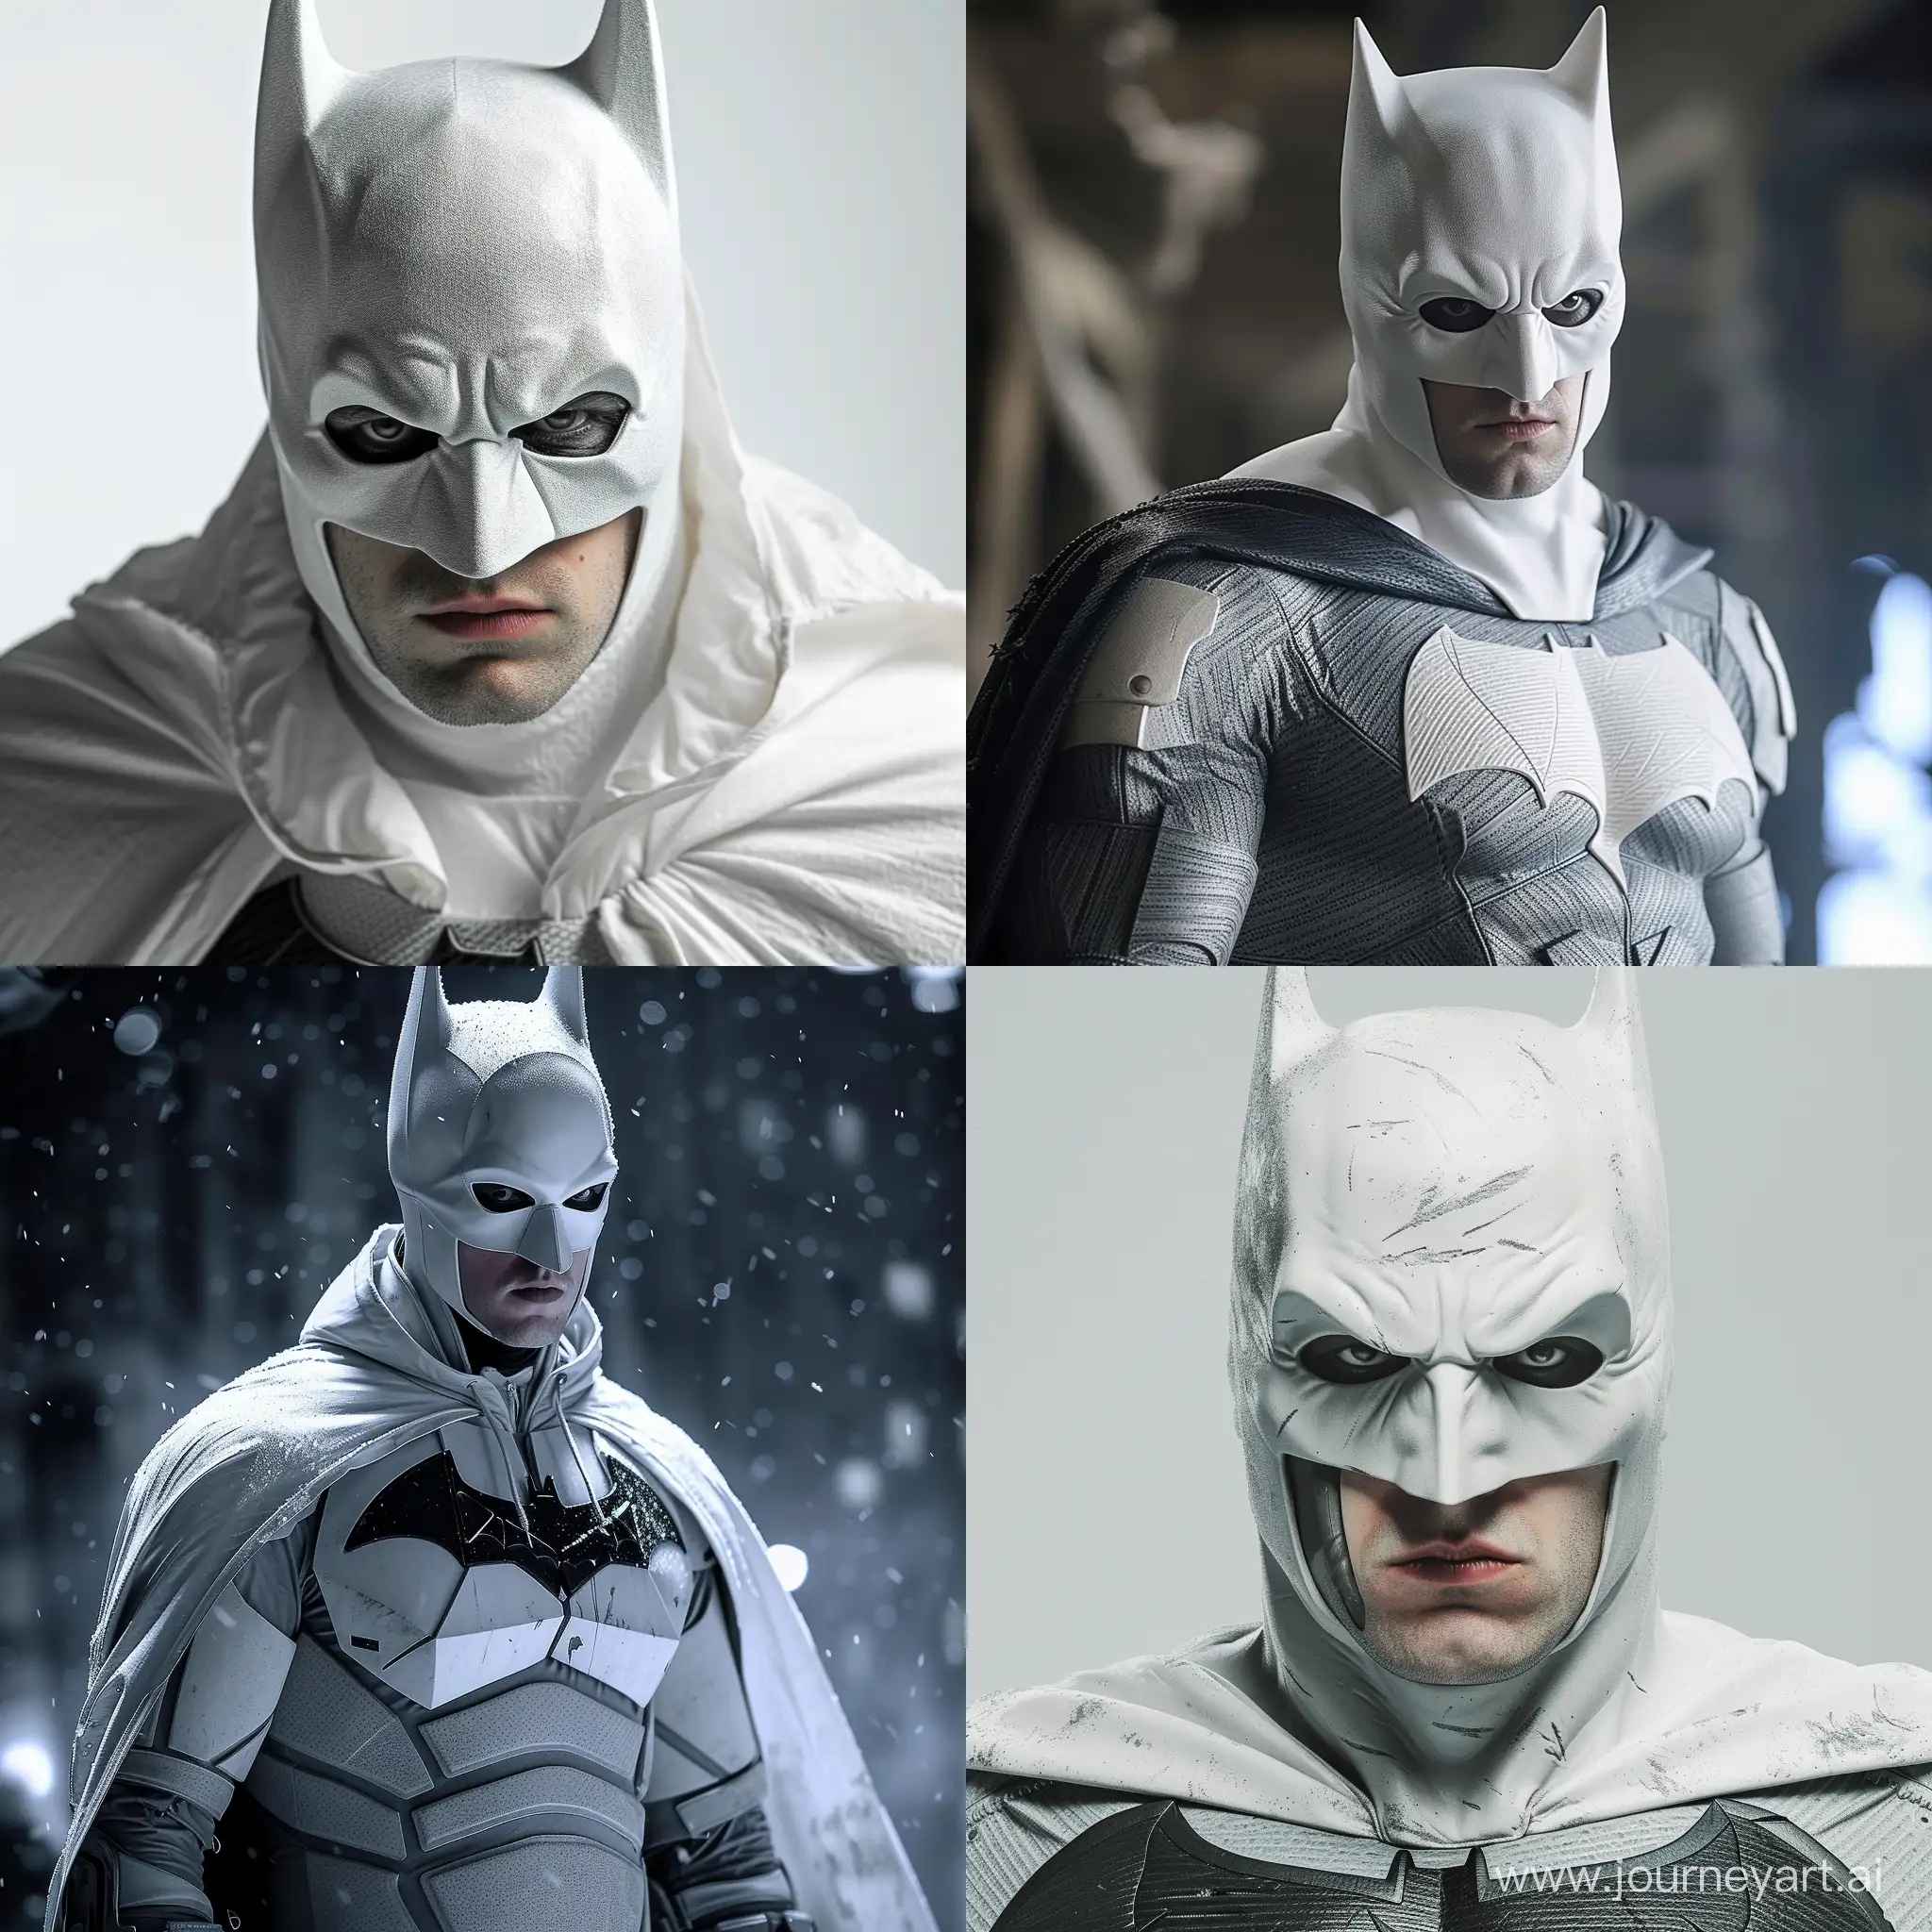 Robert-Pattinson-Portraying-Batman-in-Striking-White-Costume